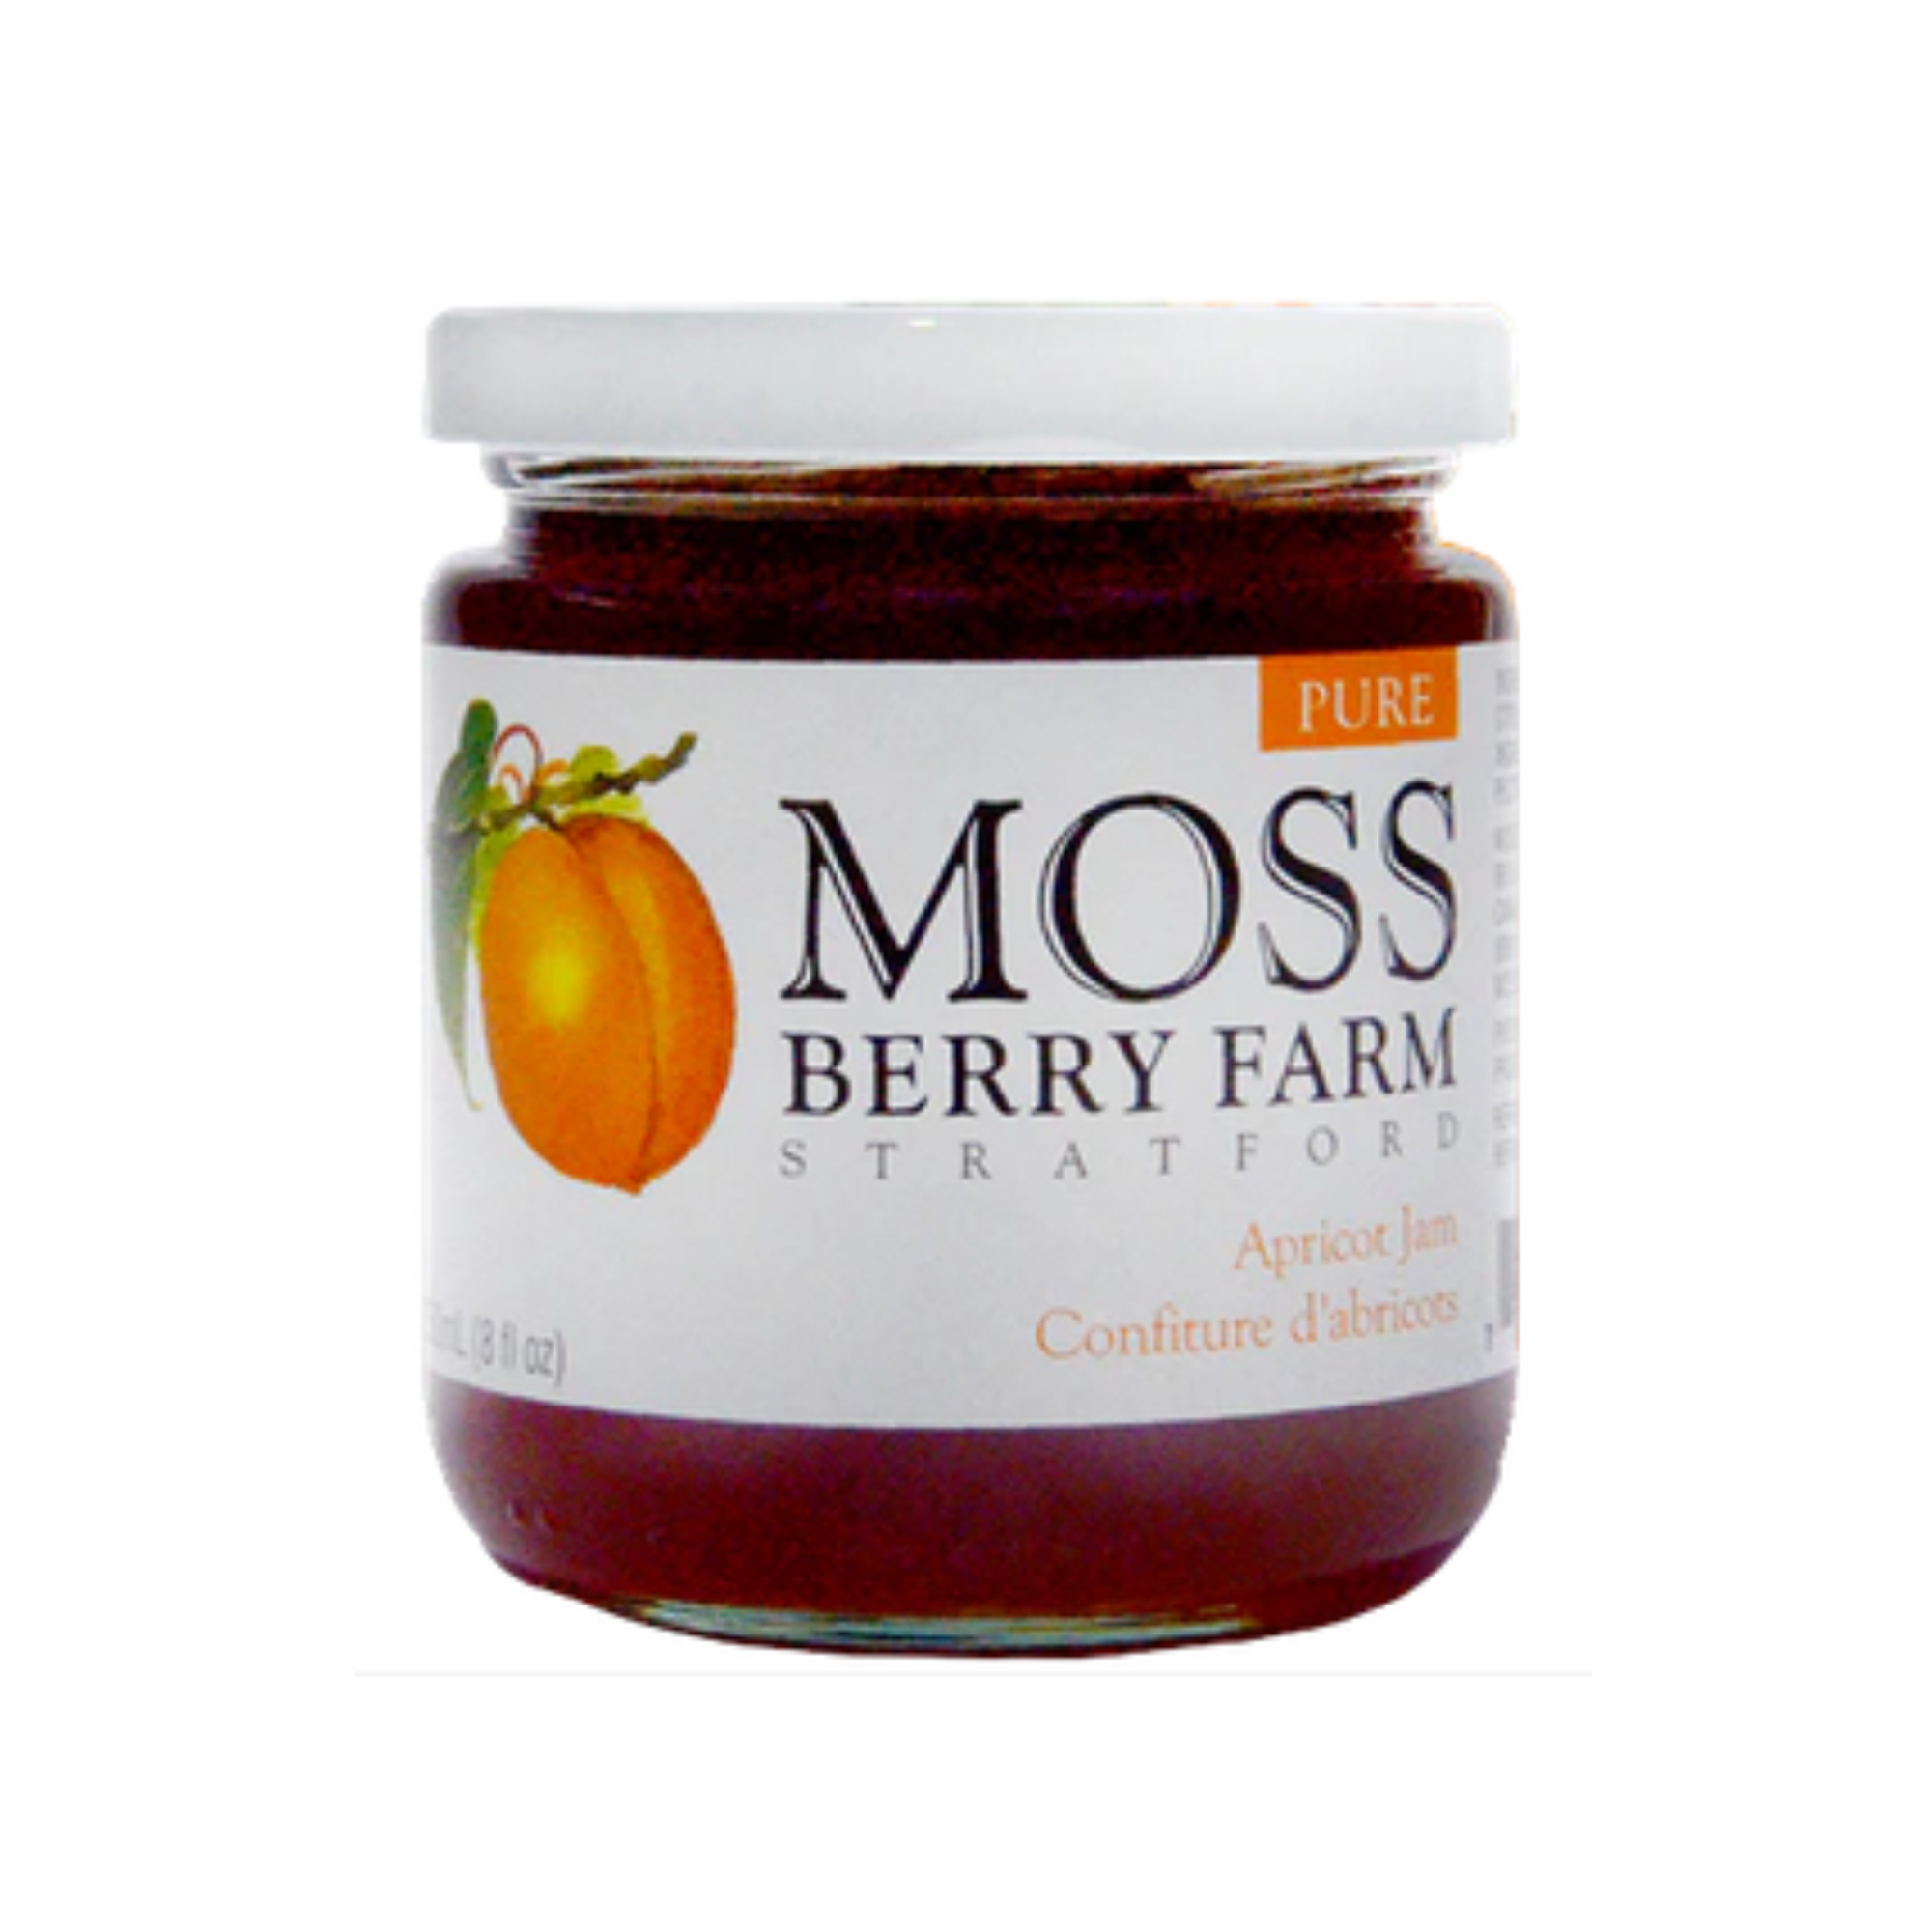 Moss Berry Farm Jam Apricot